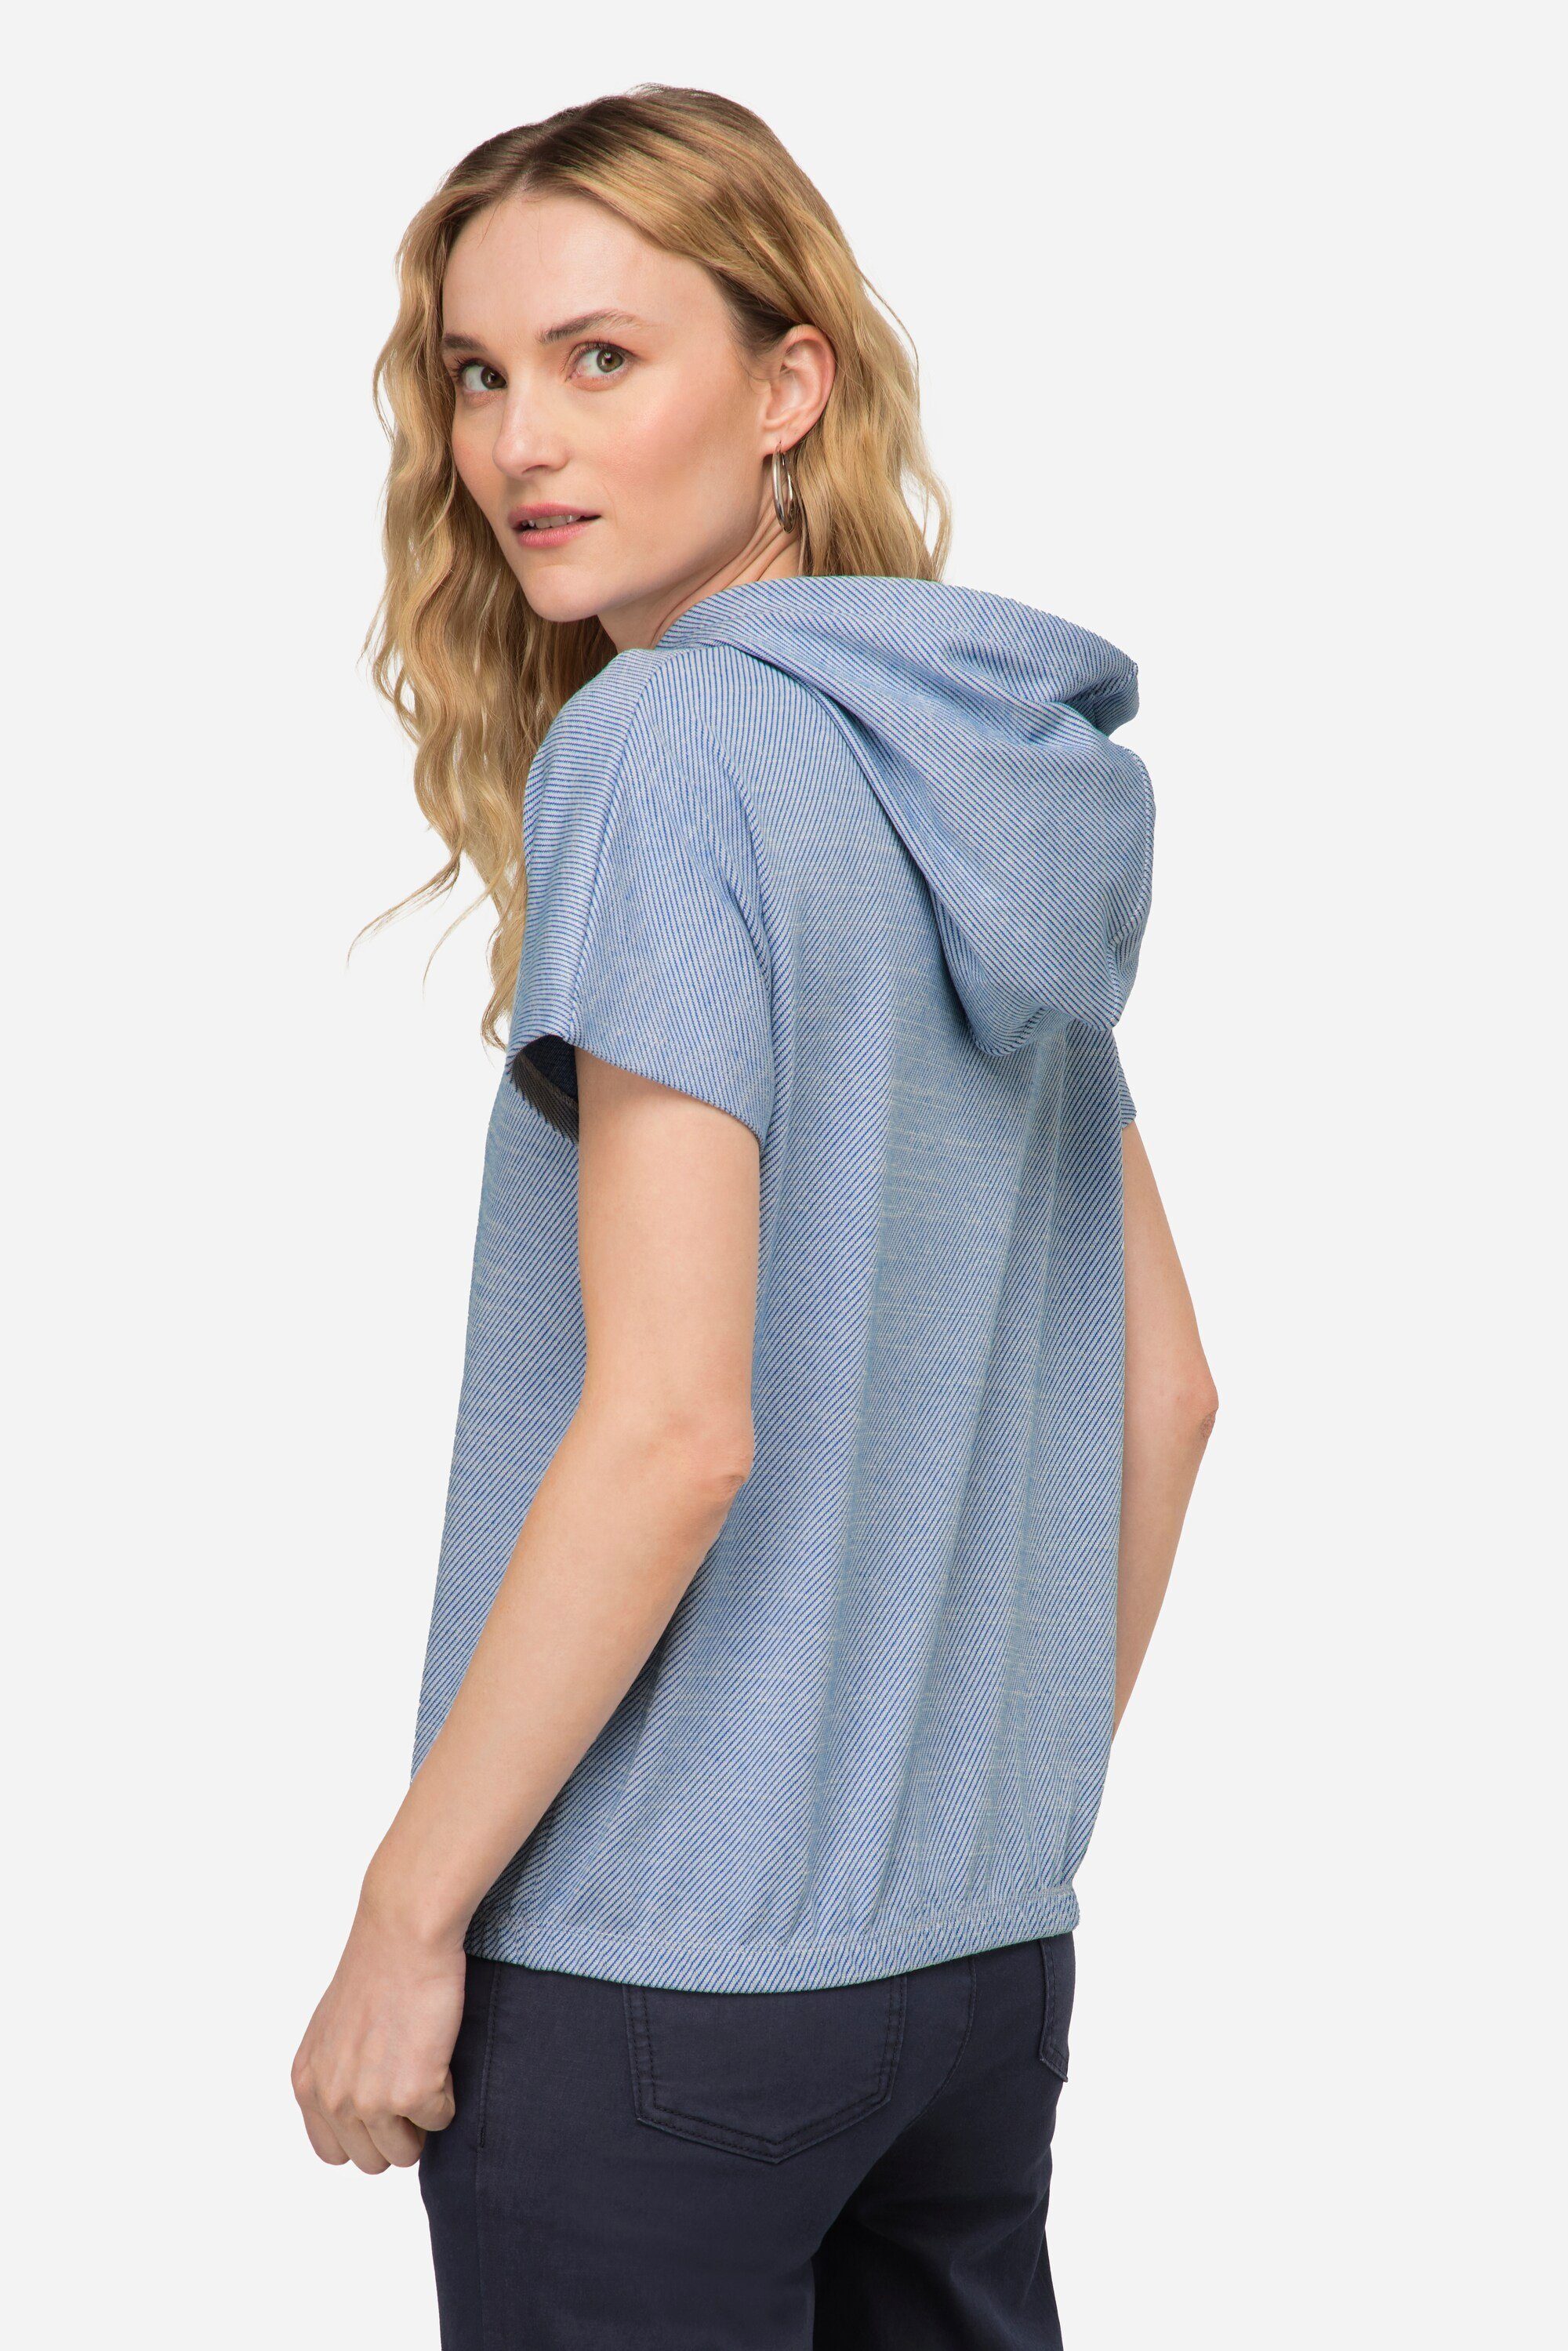 Laurasøn elastischer Kapuze Sweatshirt dunkles Saum Hoodie himmelblau oversized